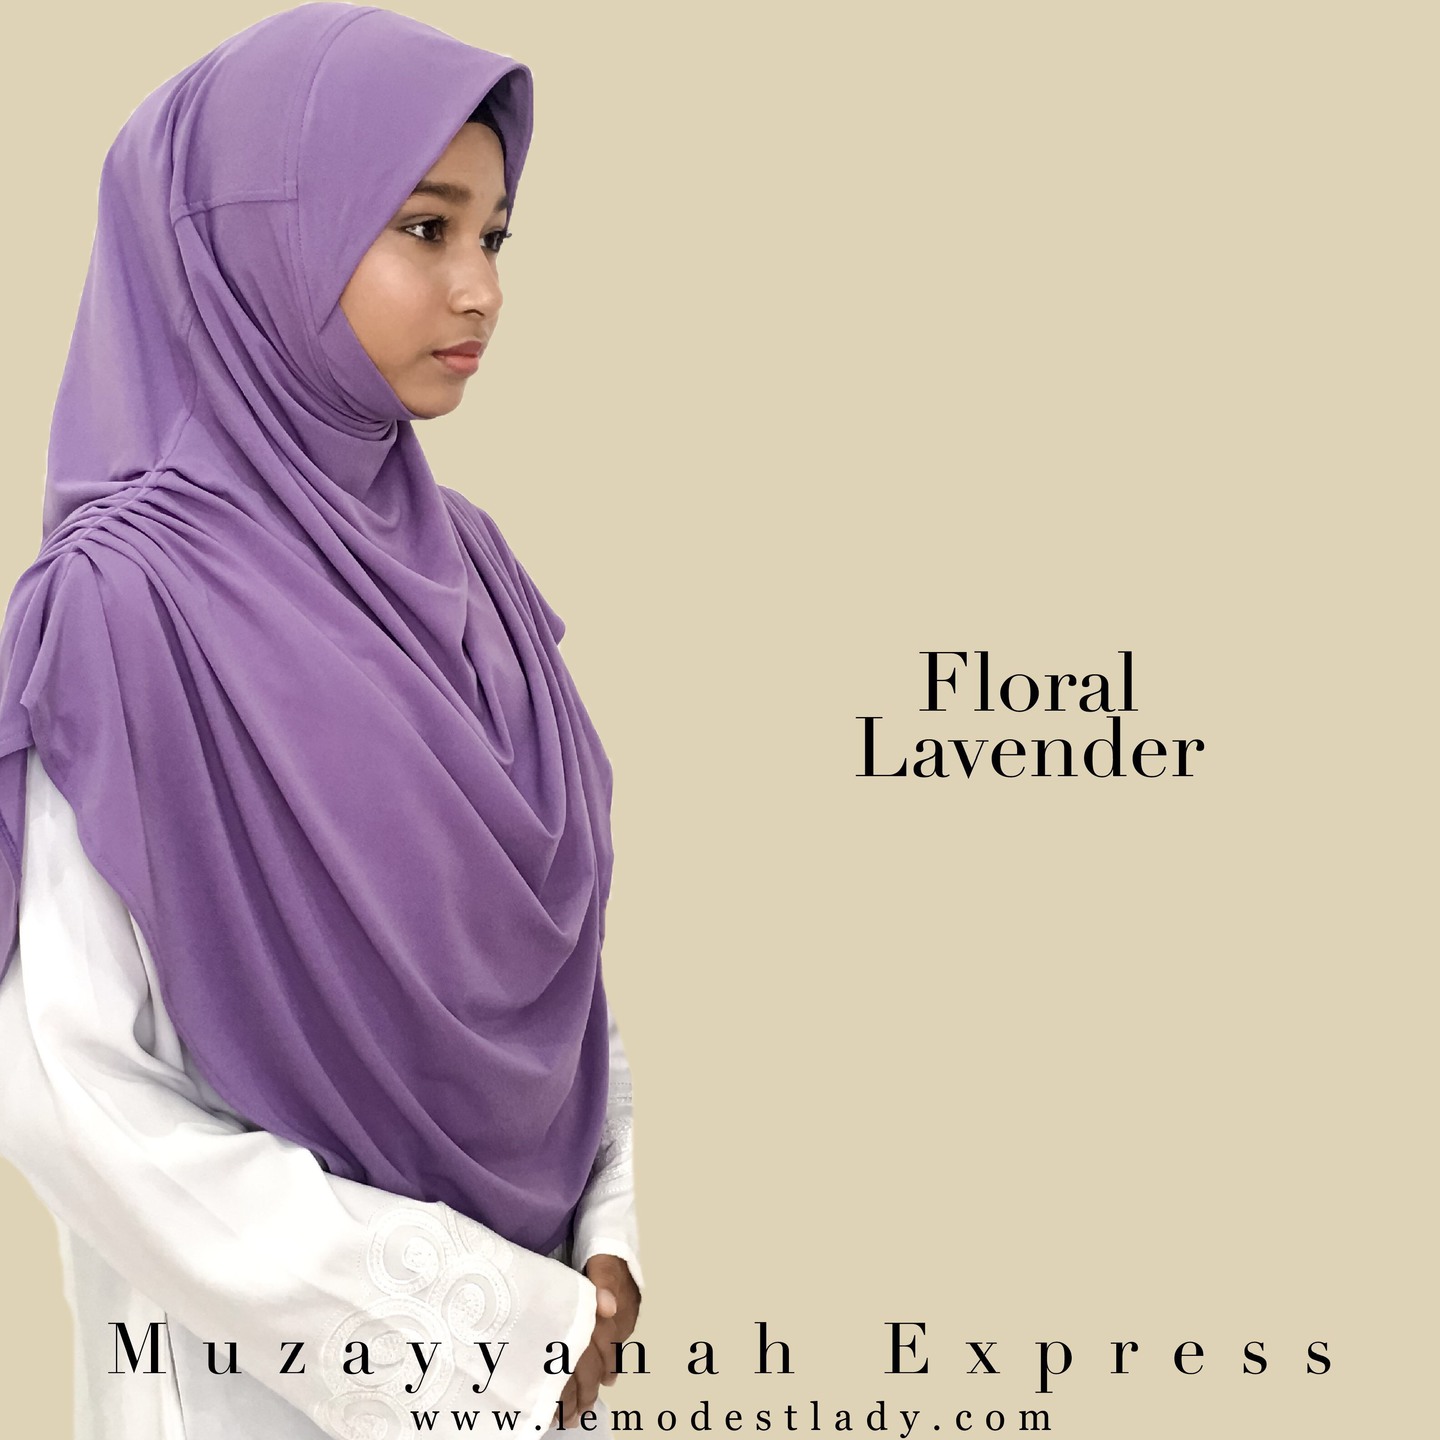 Muzayyanah Express - Floral Lavender